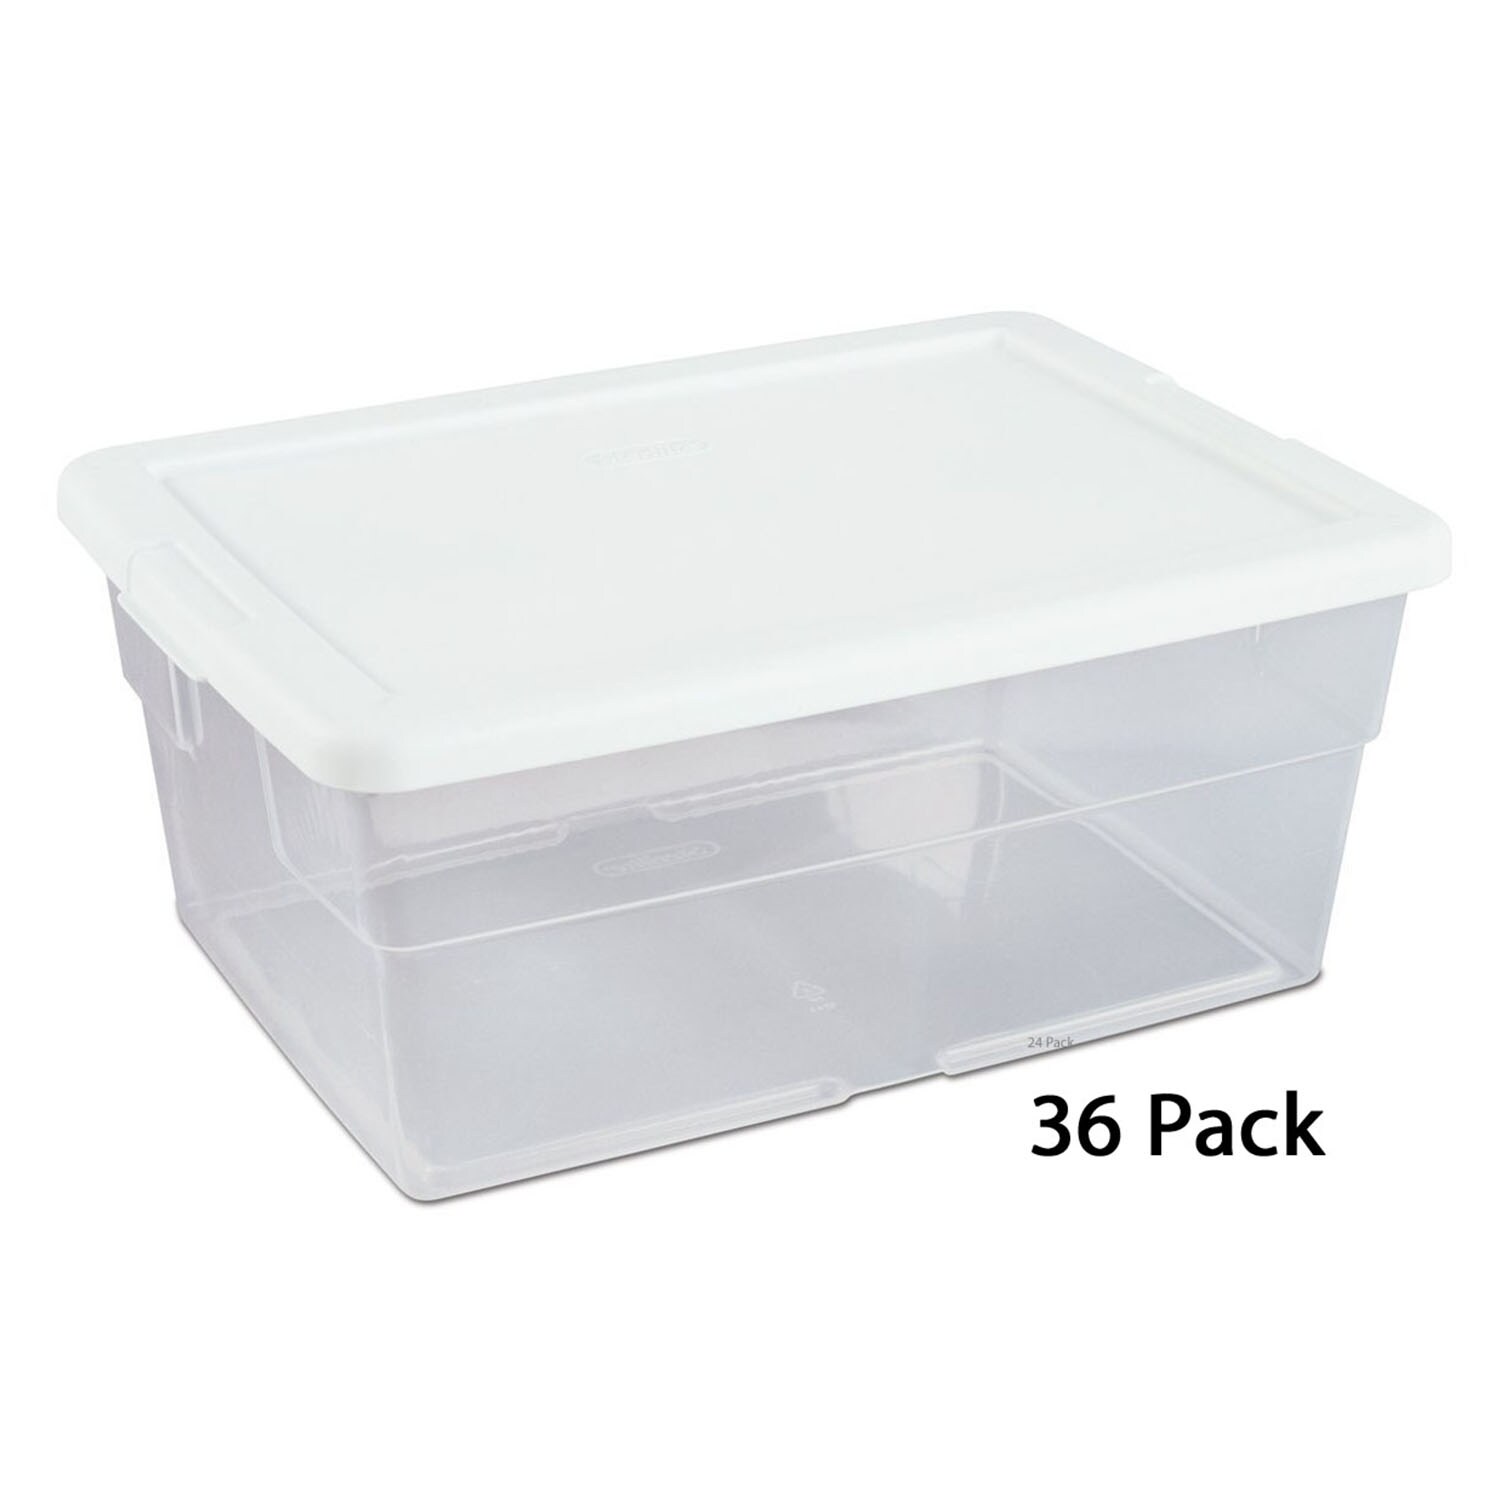 36 Pack Sterilite 15-Quart ClearView Latch Box Plastic Storage Container